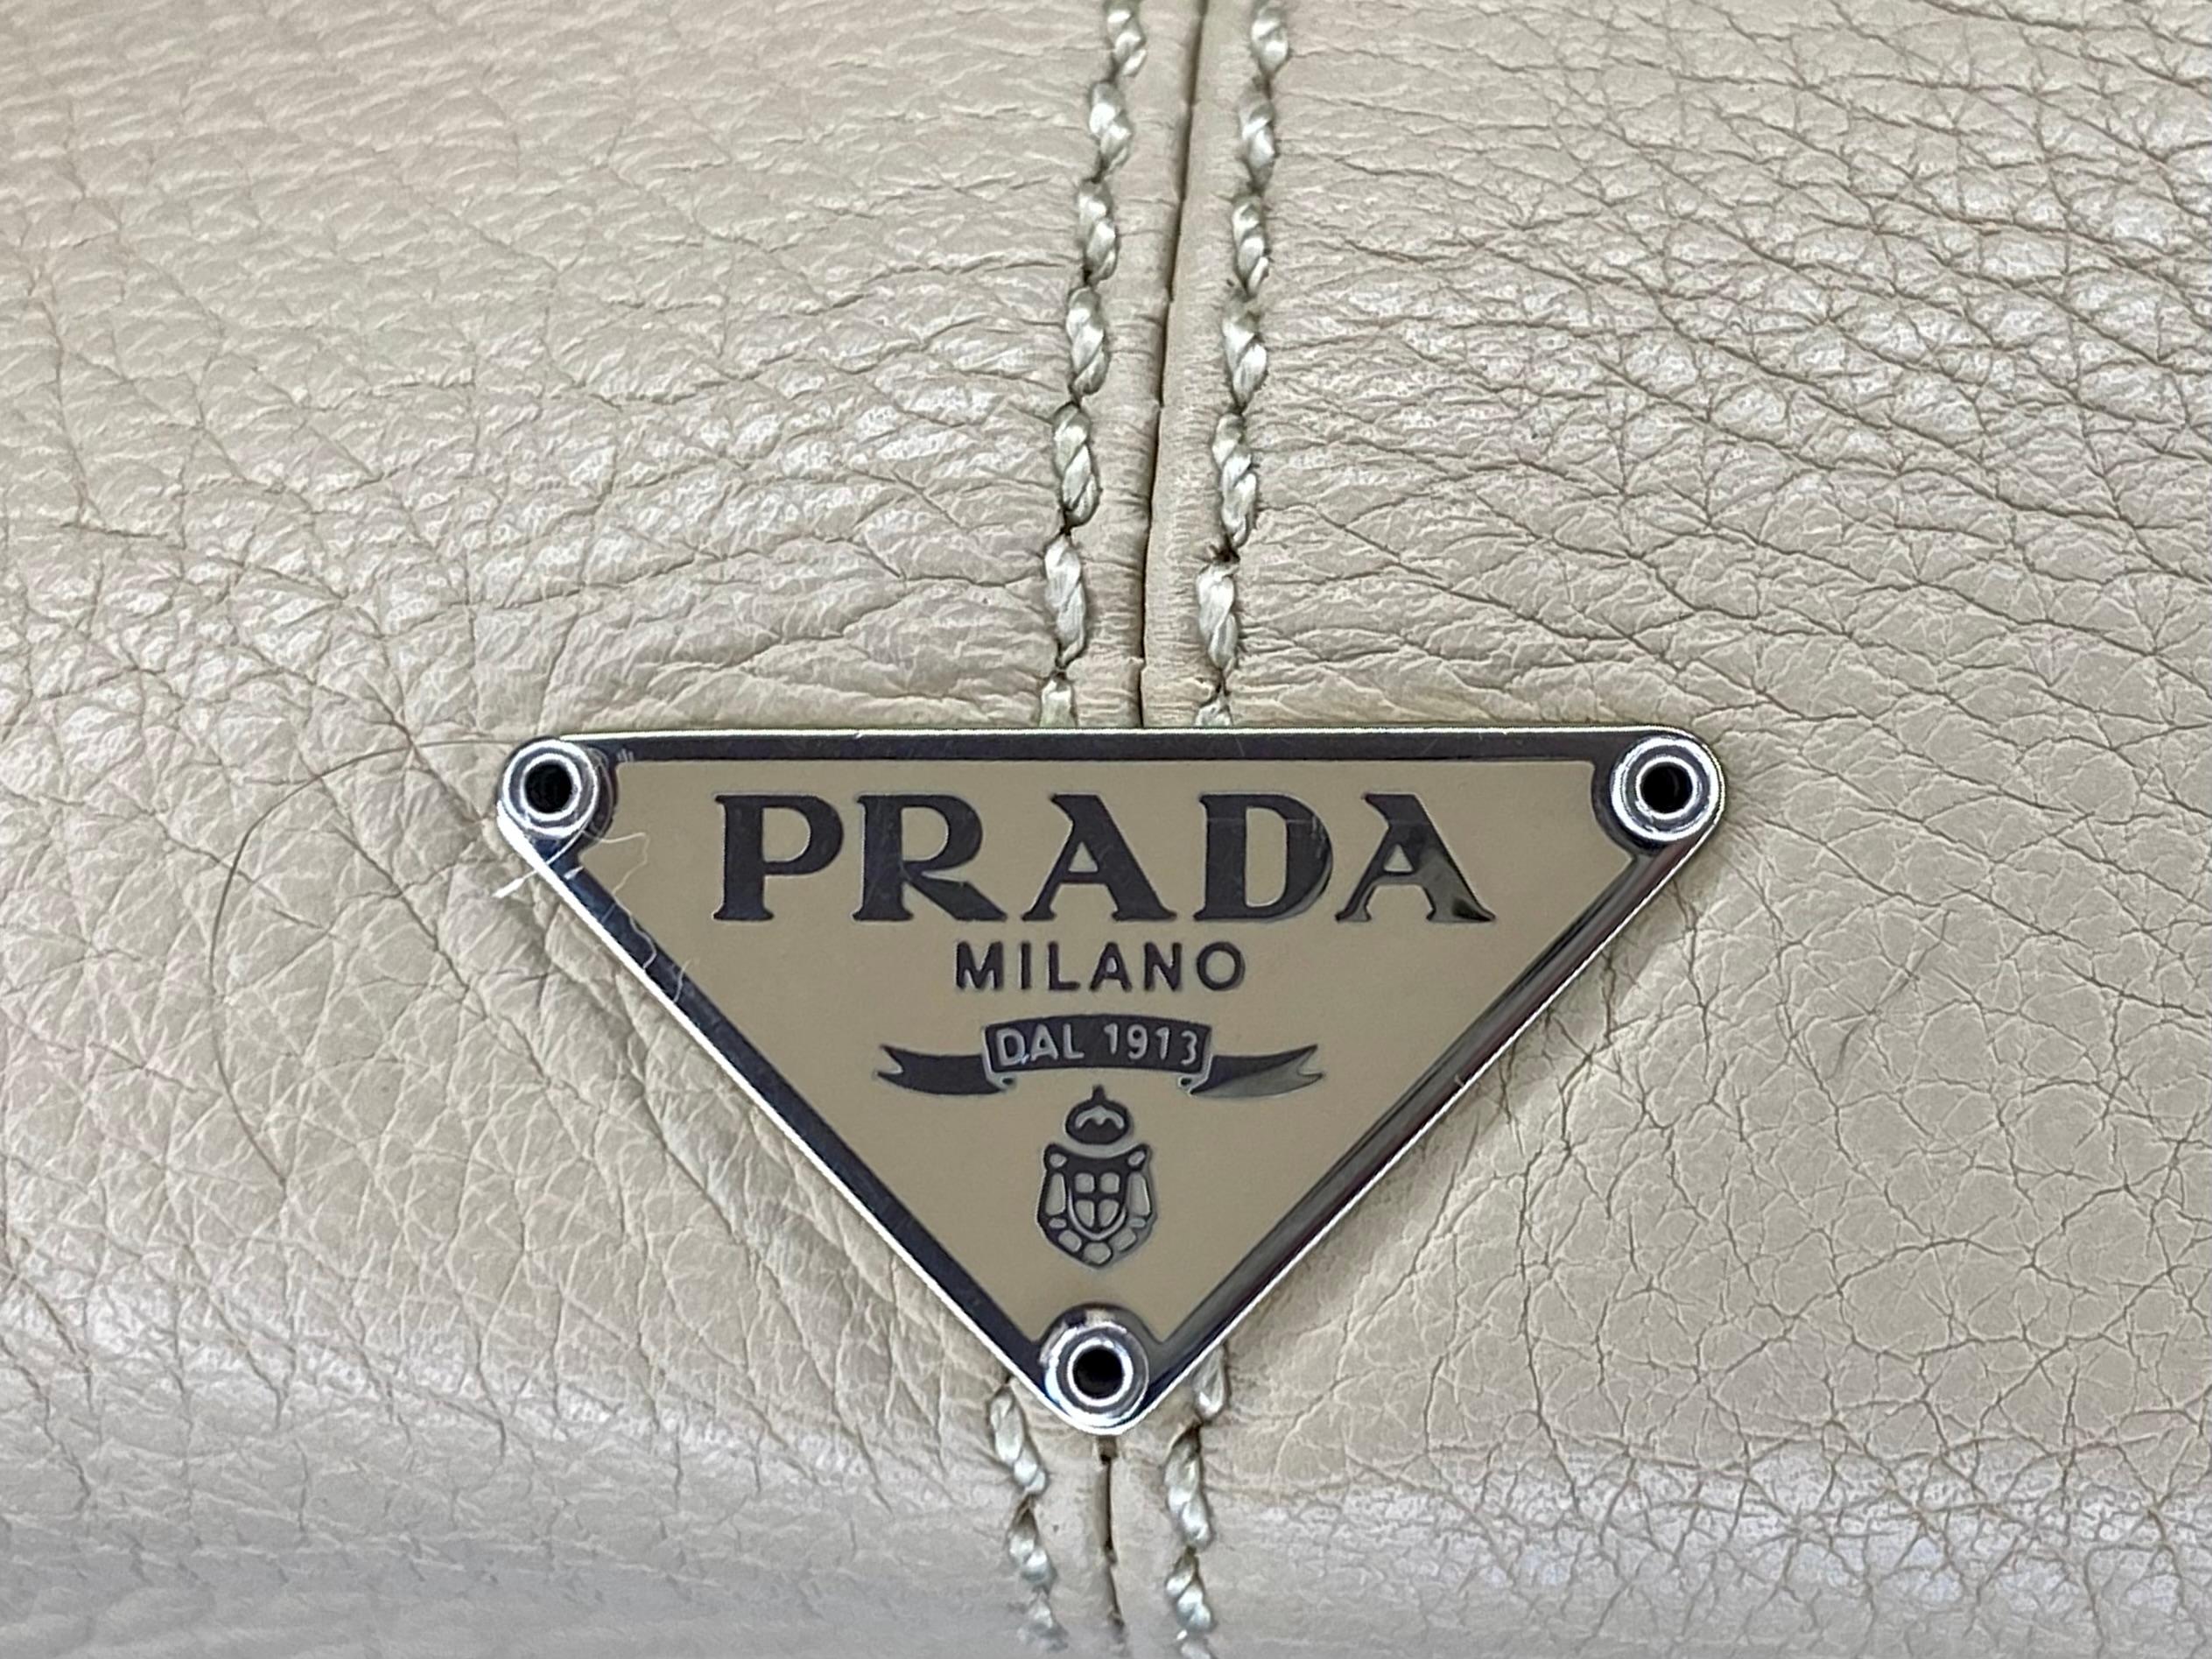 S/S 2003 Prada Oversized Beaded Leather & Metal Hoop Ring Medium Hobo Bag In Good Condition For Sale In Philadelphia, PA